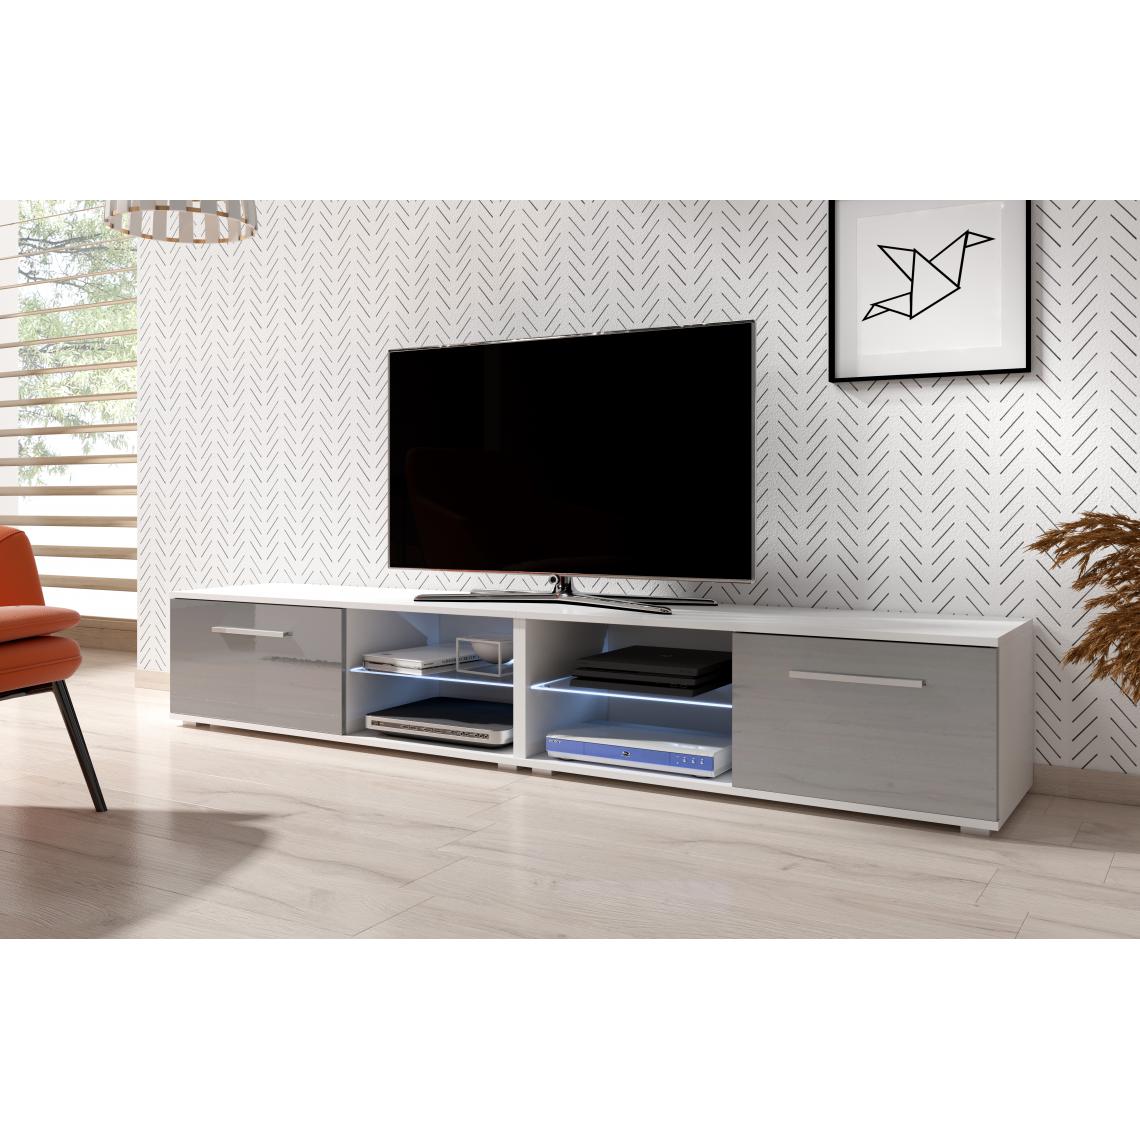 3xeliving - Meuble TV moderniste Punes blanc / gris brillant 140 cm LED - Meubles TV, Hi-Fi